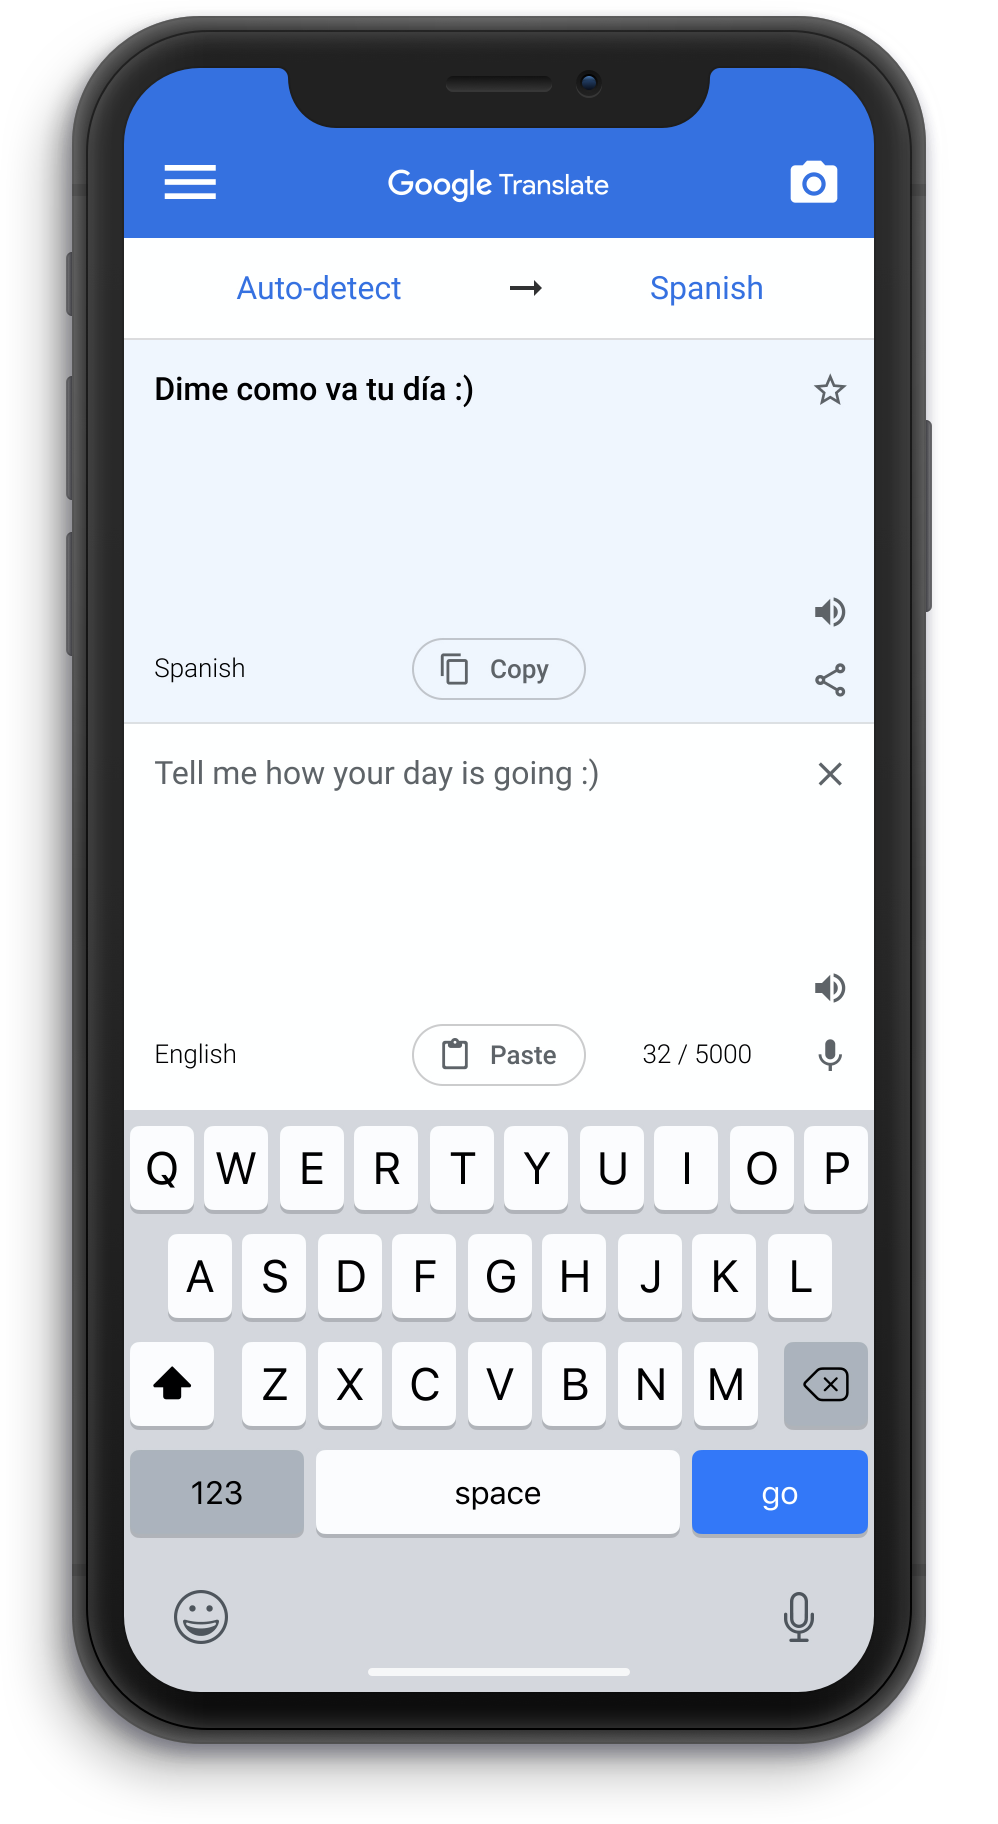 Google Translate App displayed on iPhone screen